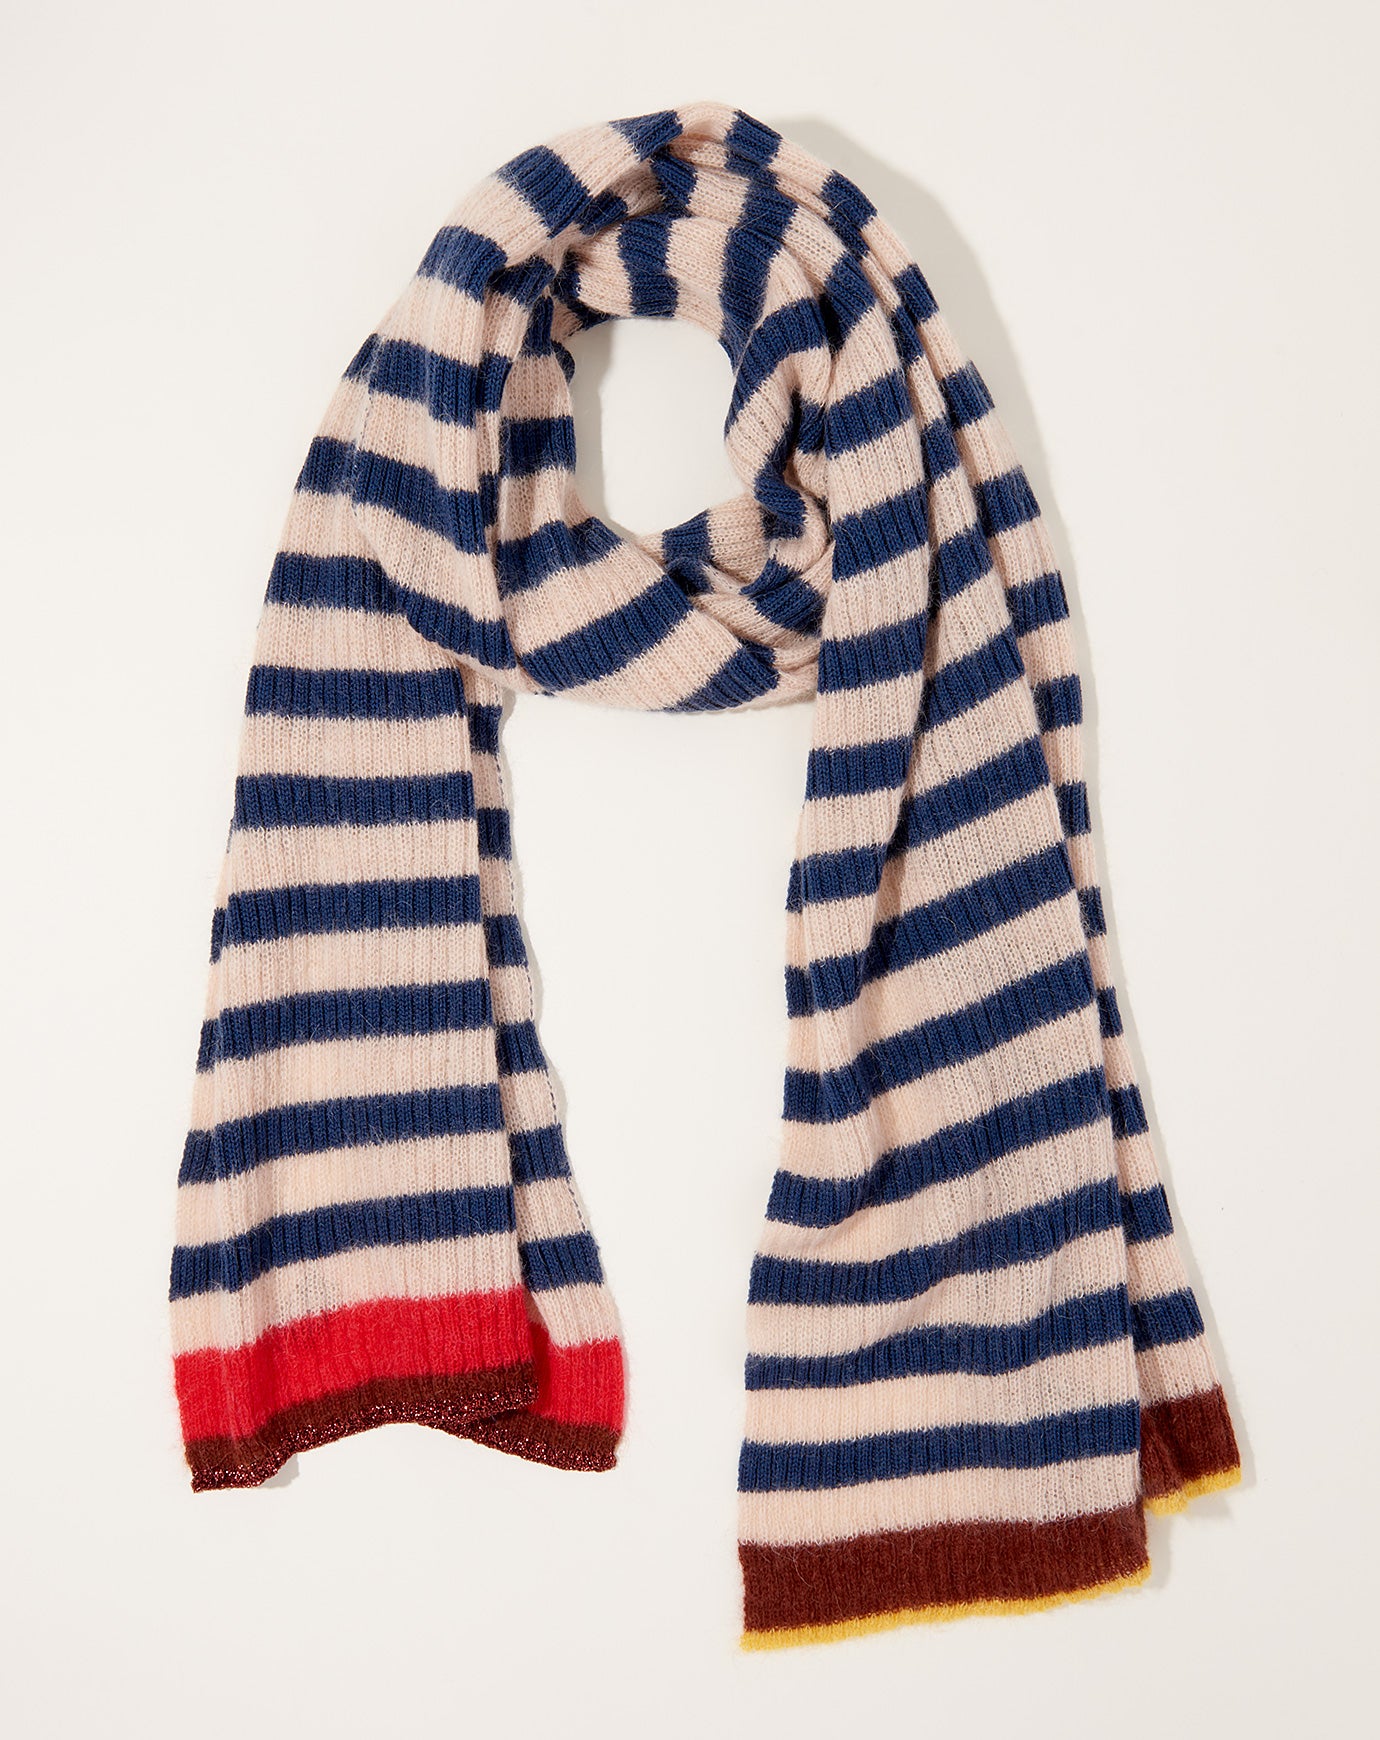 Exquisite J Mohair & Alpaca Navy Knit Stripe Scarf